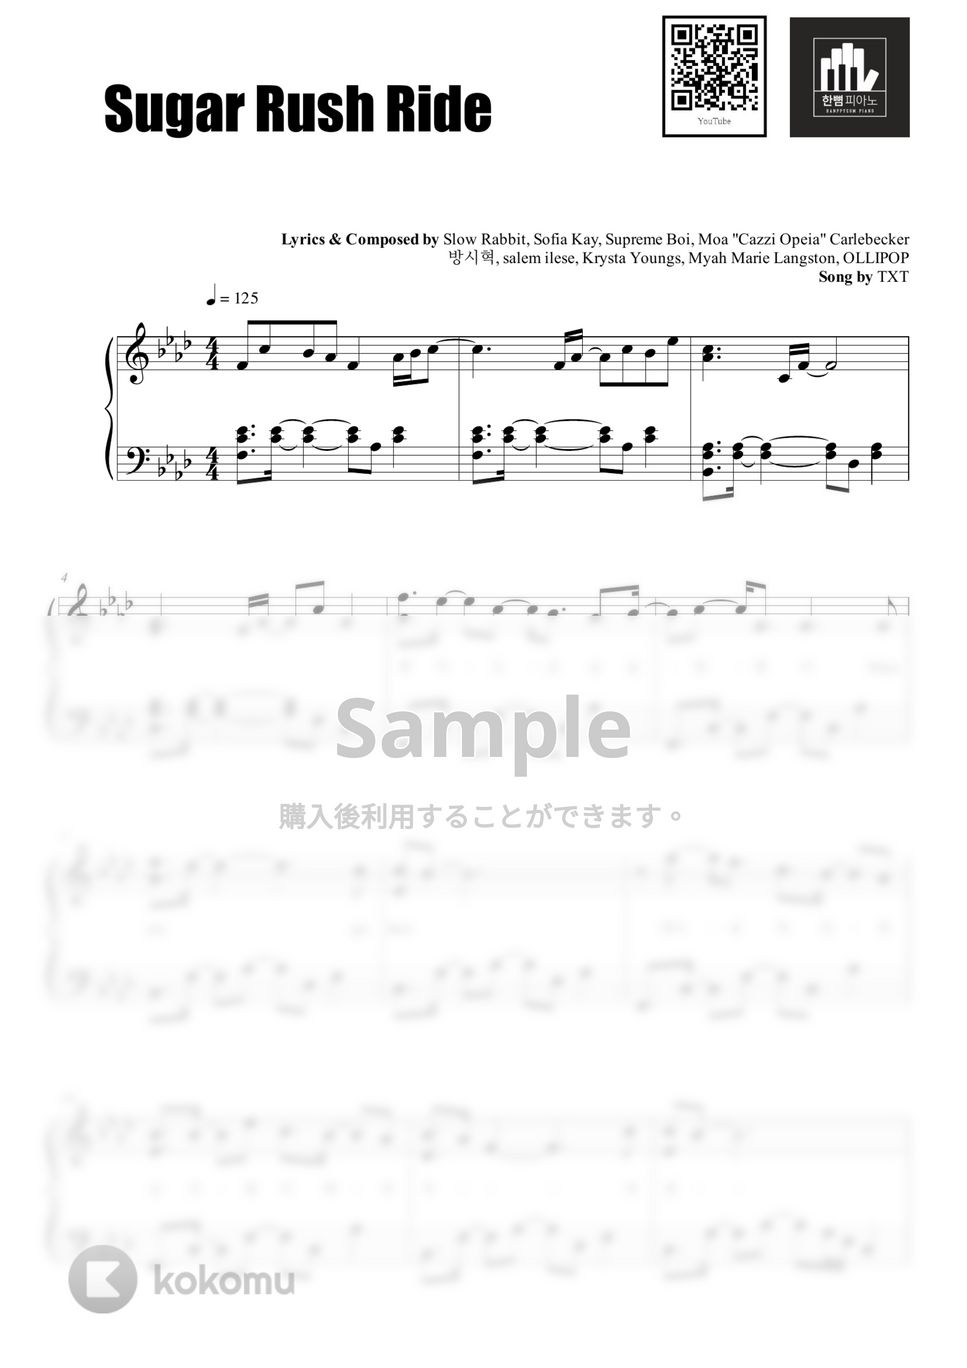 TXT - Sugar Rush Ride (PIANO COVER) by HANPPYEOMPIANO